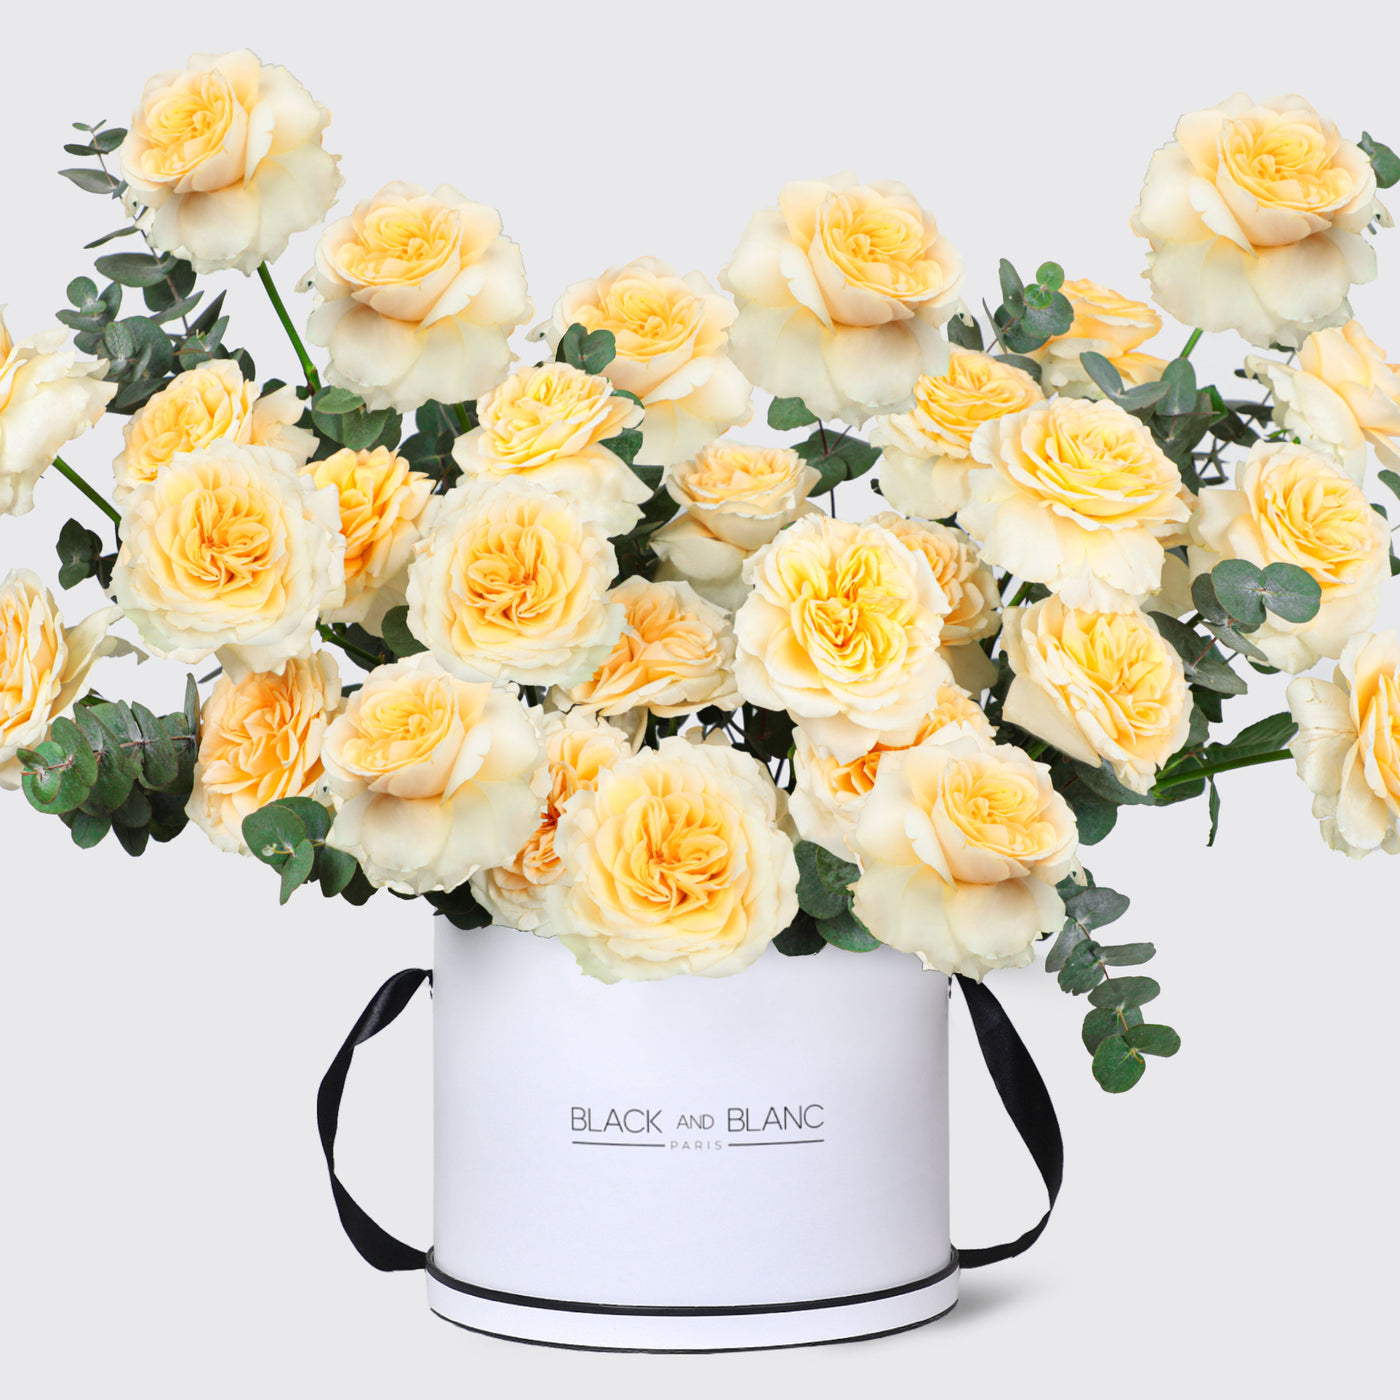 Golden Grace in Box - Fresh Flowers